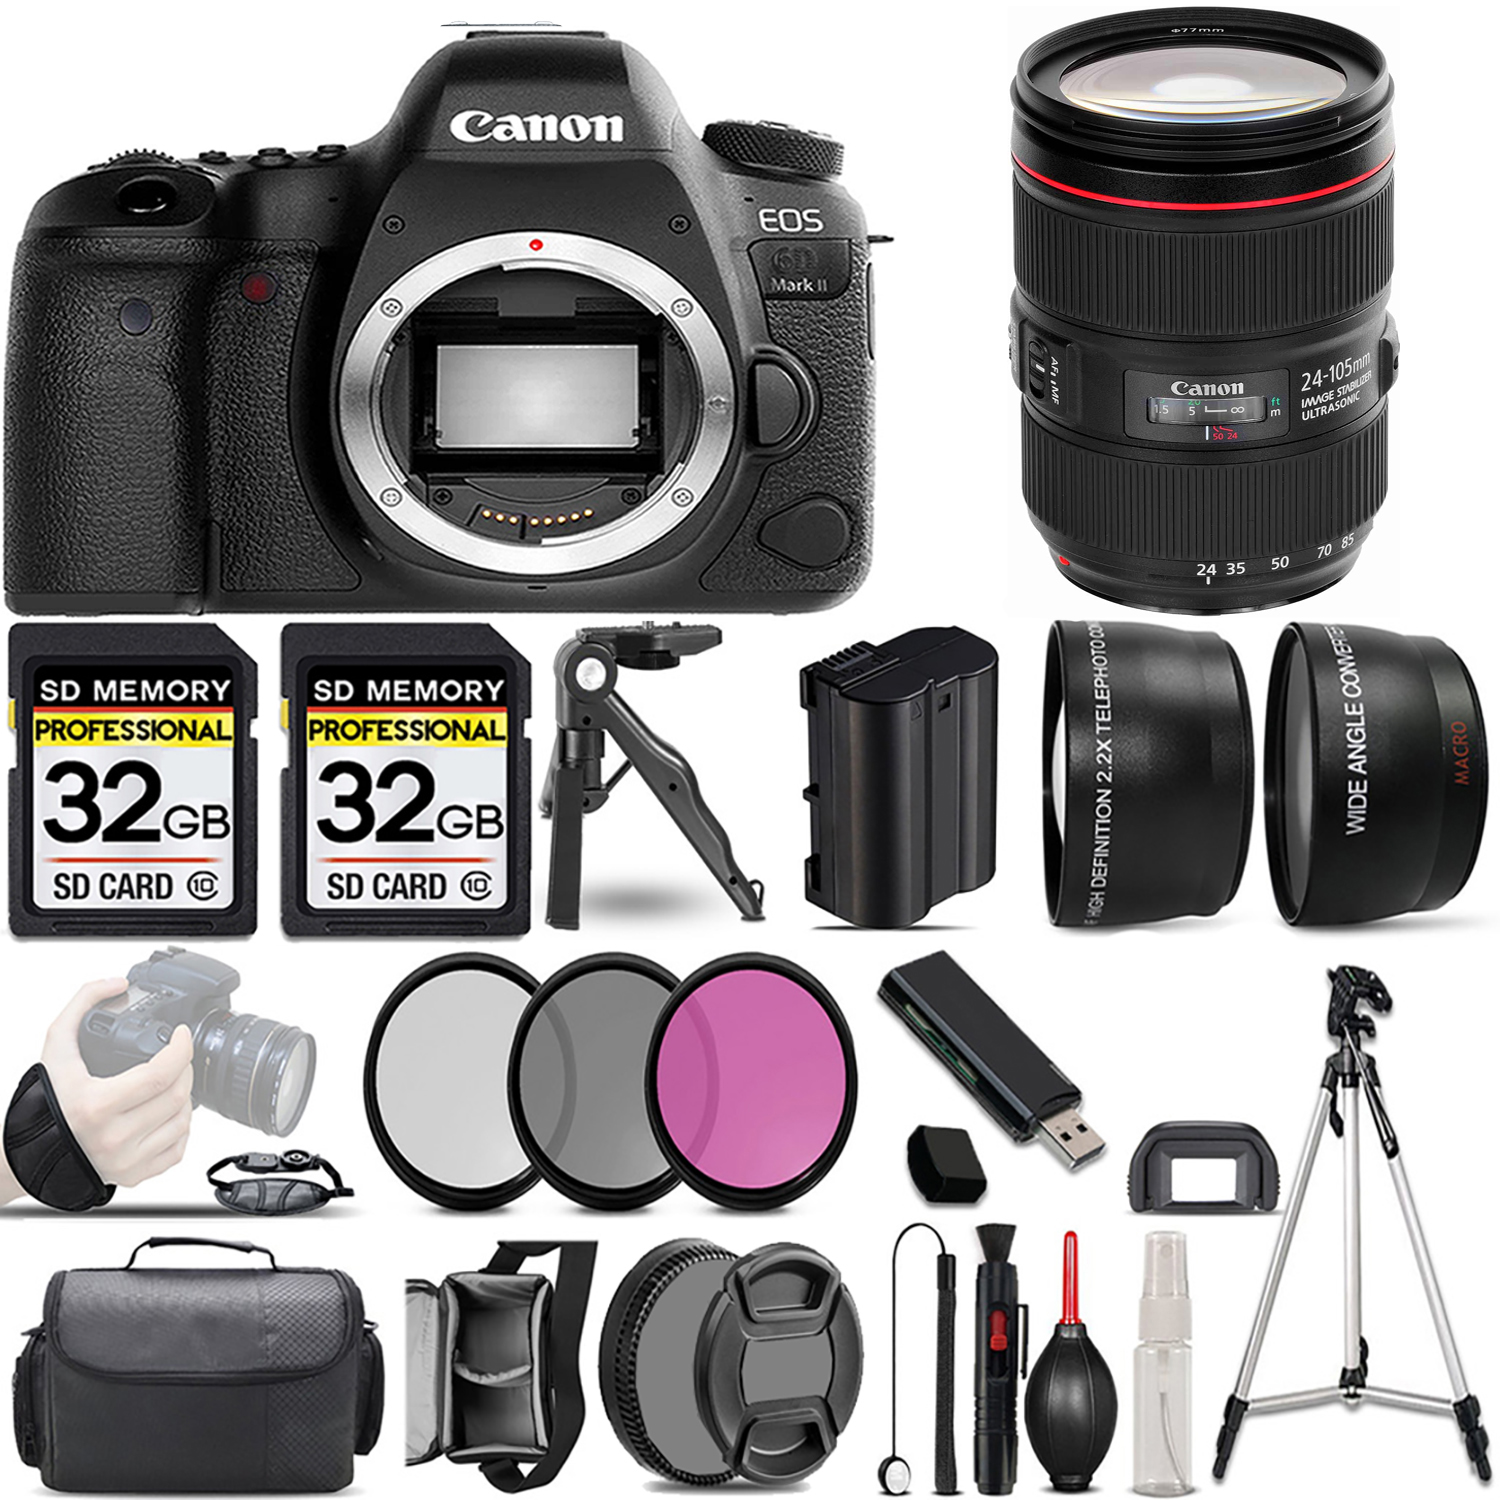 EOS 6D Mark II Camera + 24-105mm f/4L IS II USM Lens + 3 Piece Filter Set + 64GB *FREE SHIPPING*